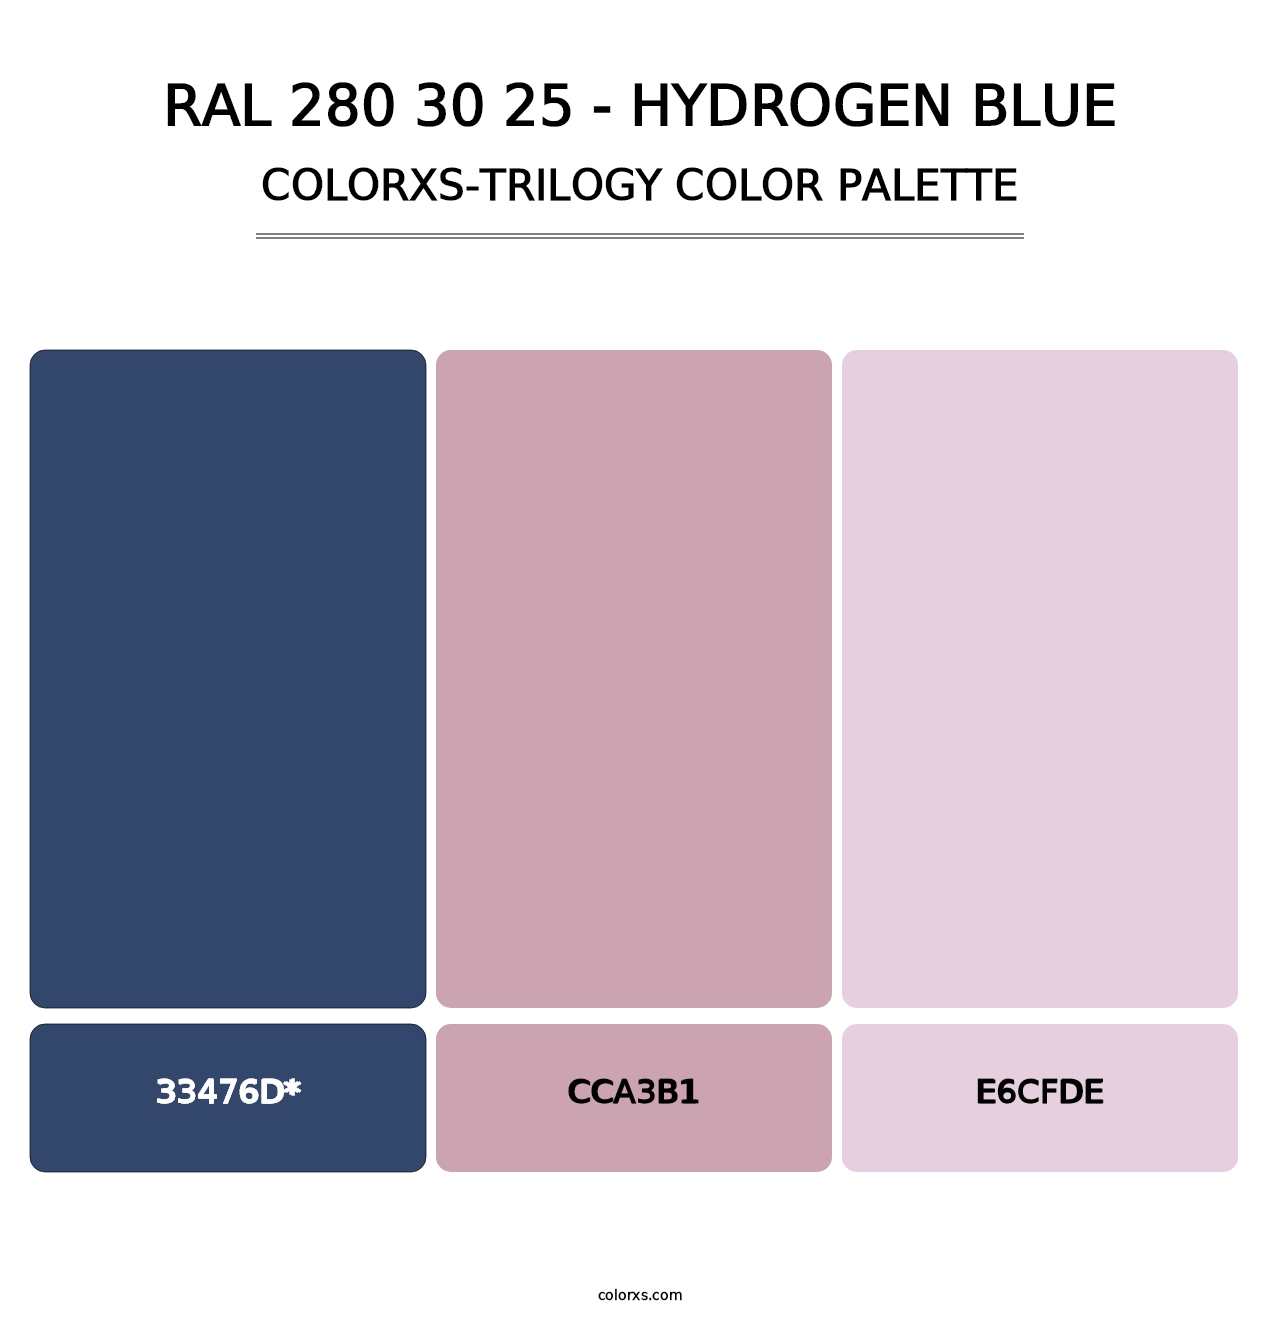 RAL 280 30 25 - Hydrogen Blue - Colorxs Trilogy Palette